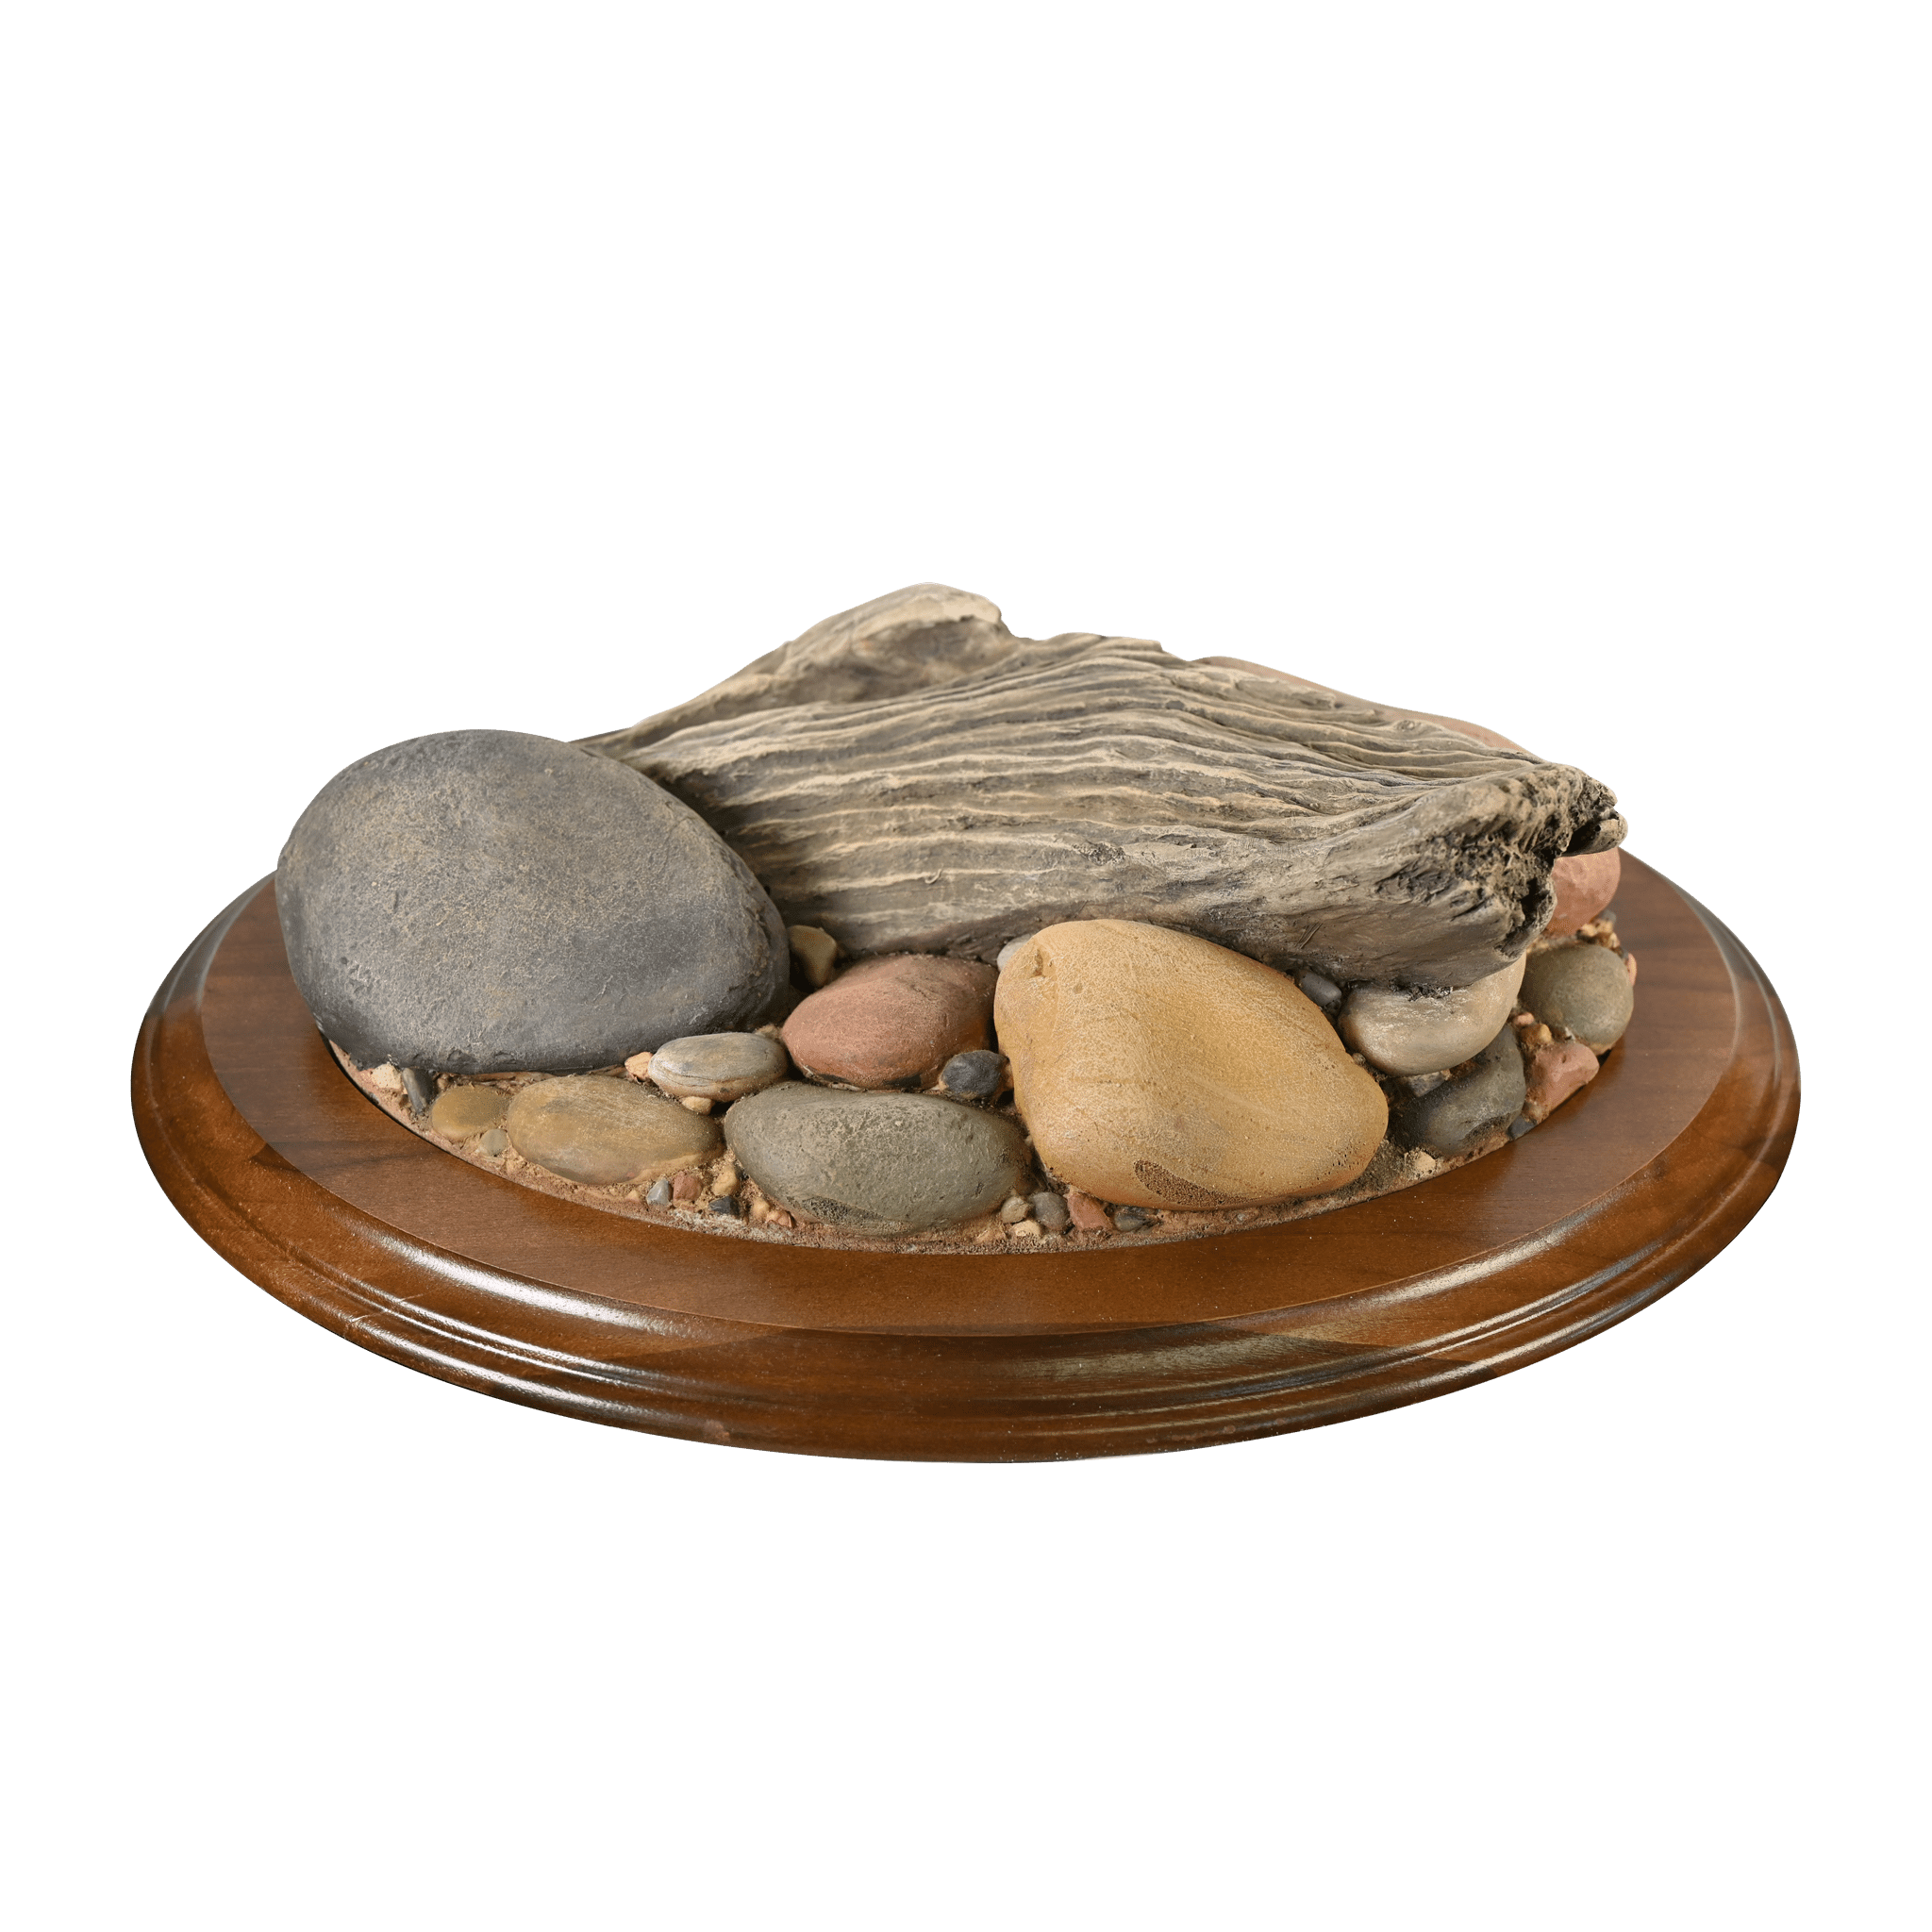 Rock/Driftwood Base (Large Oval) - Matuska Taxidermy Supply Company